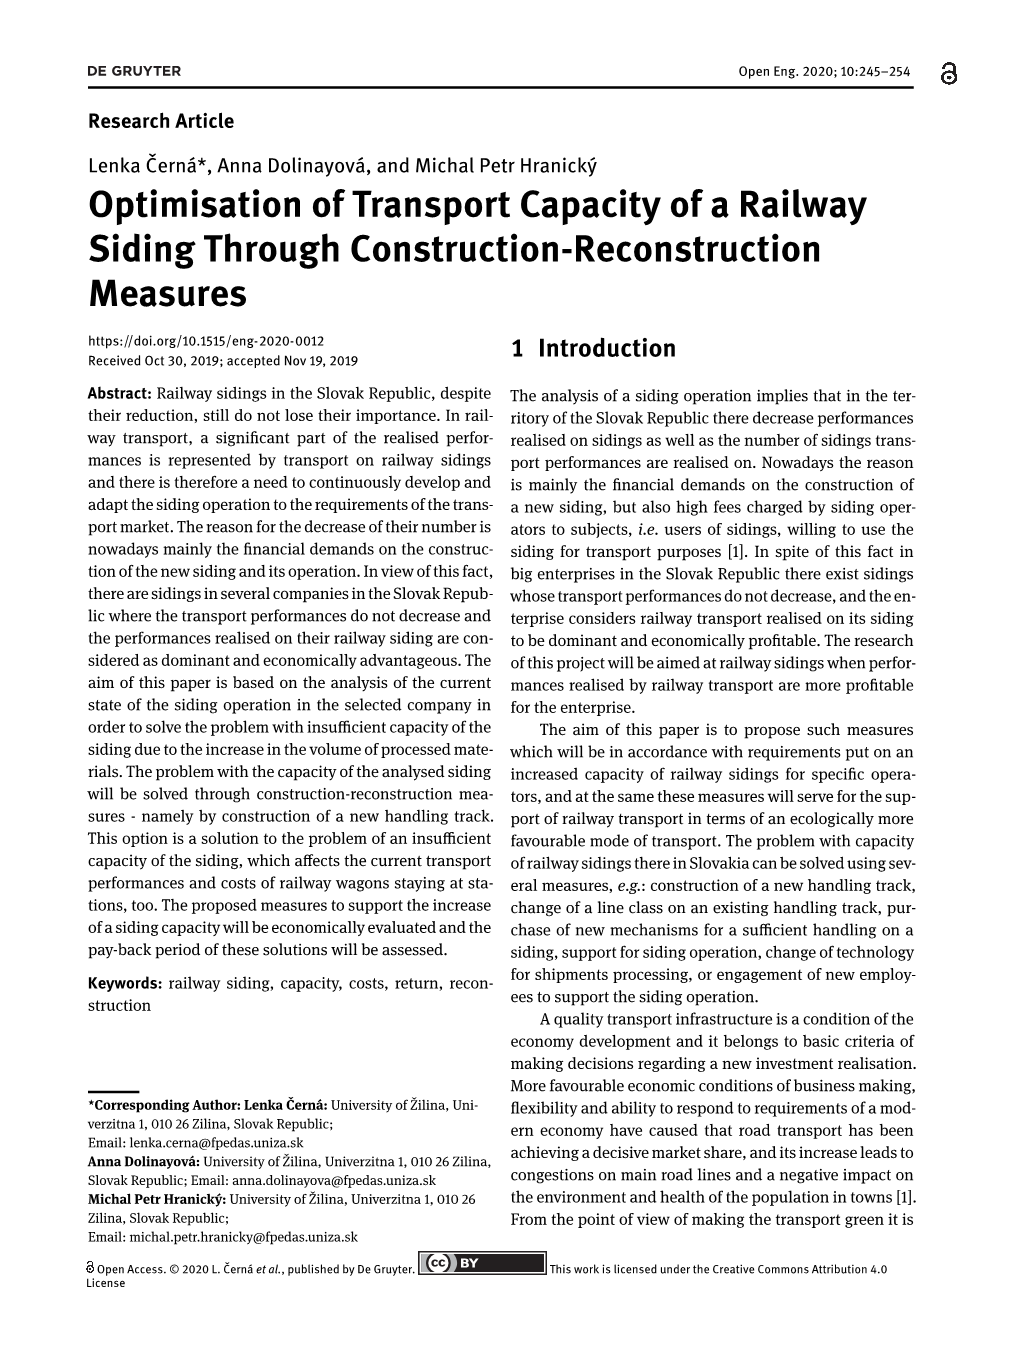 Optimisation of Transport Capacity of a Railway Siding Through